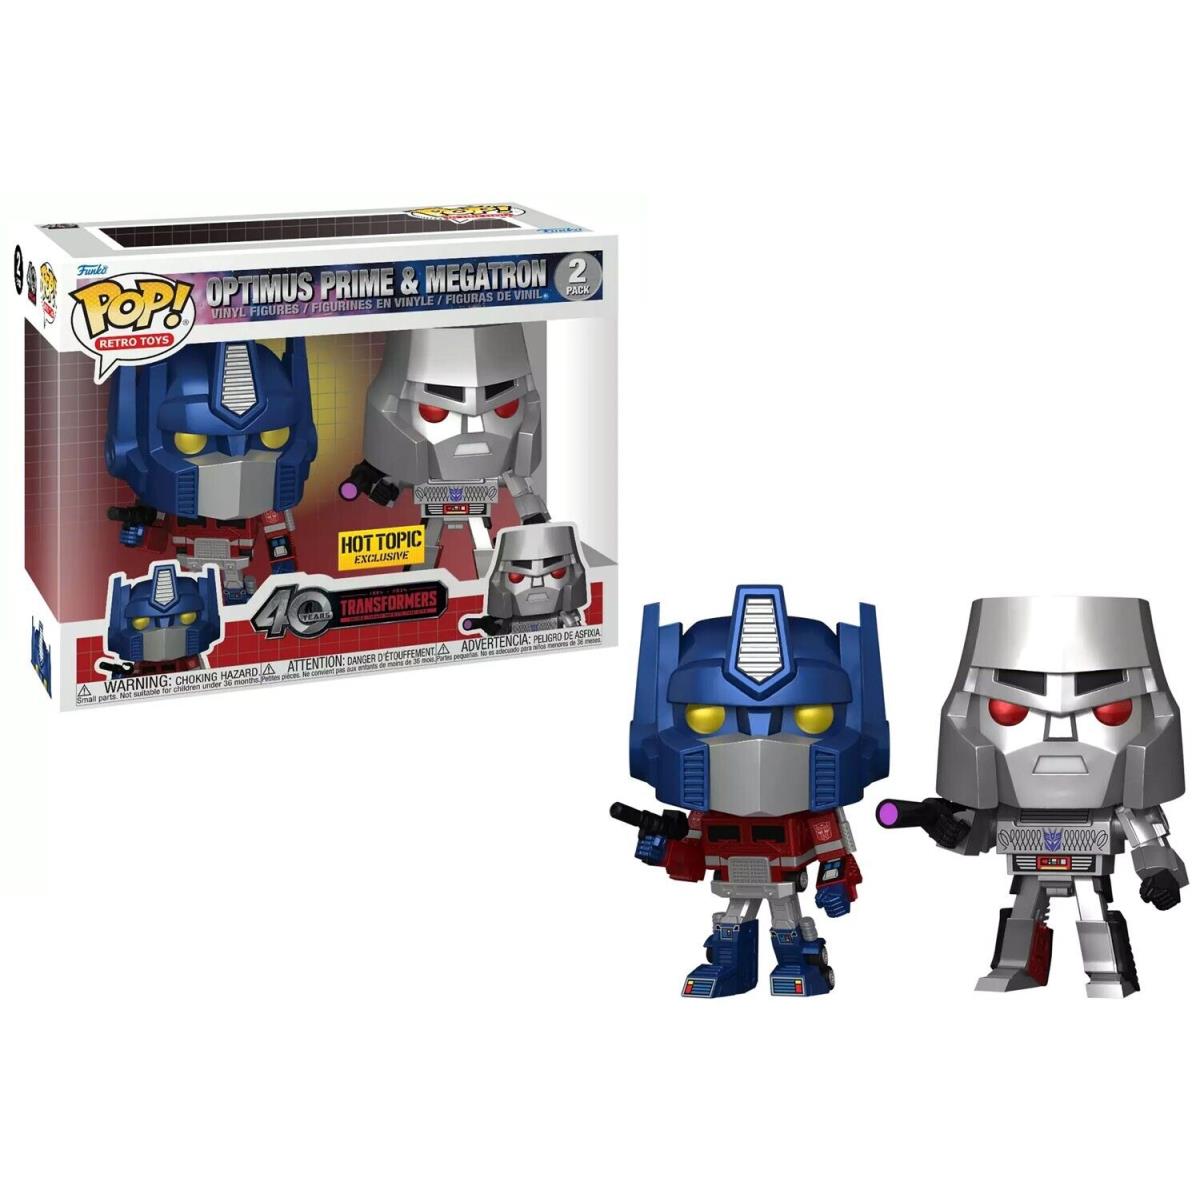 Transformers Generation 1 Pop Retro Toys Optimus Prime Megatron Vinyl Figure